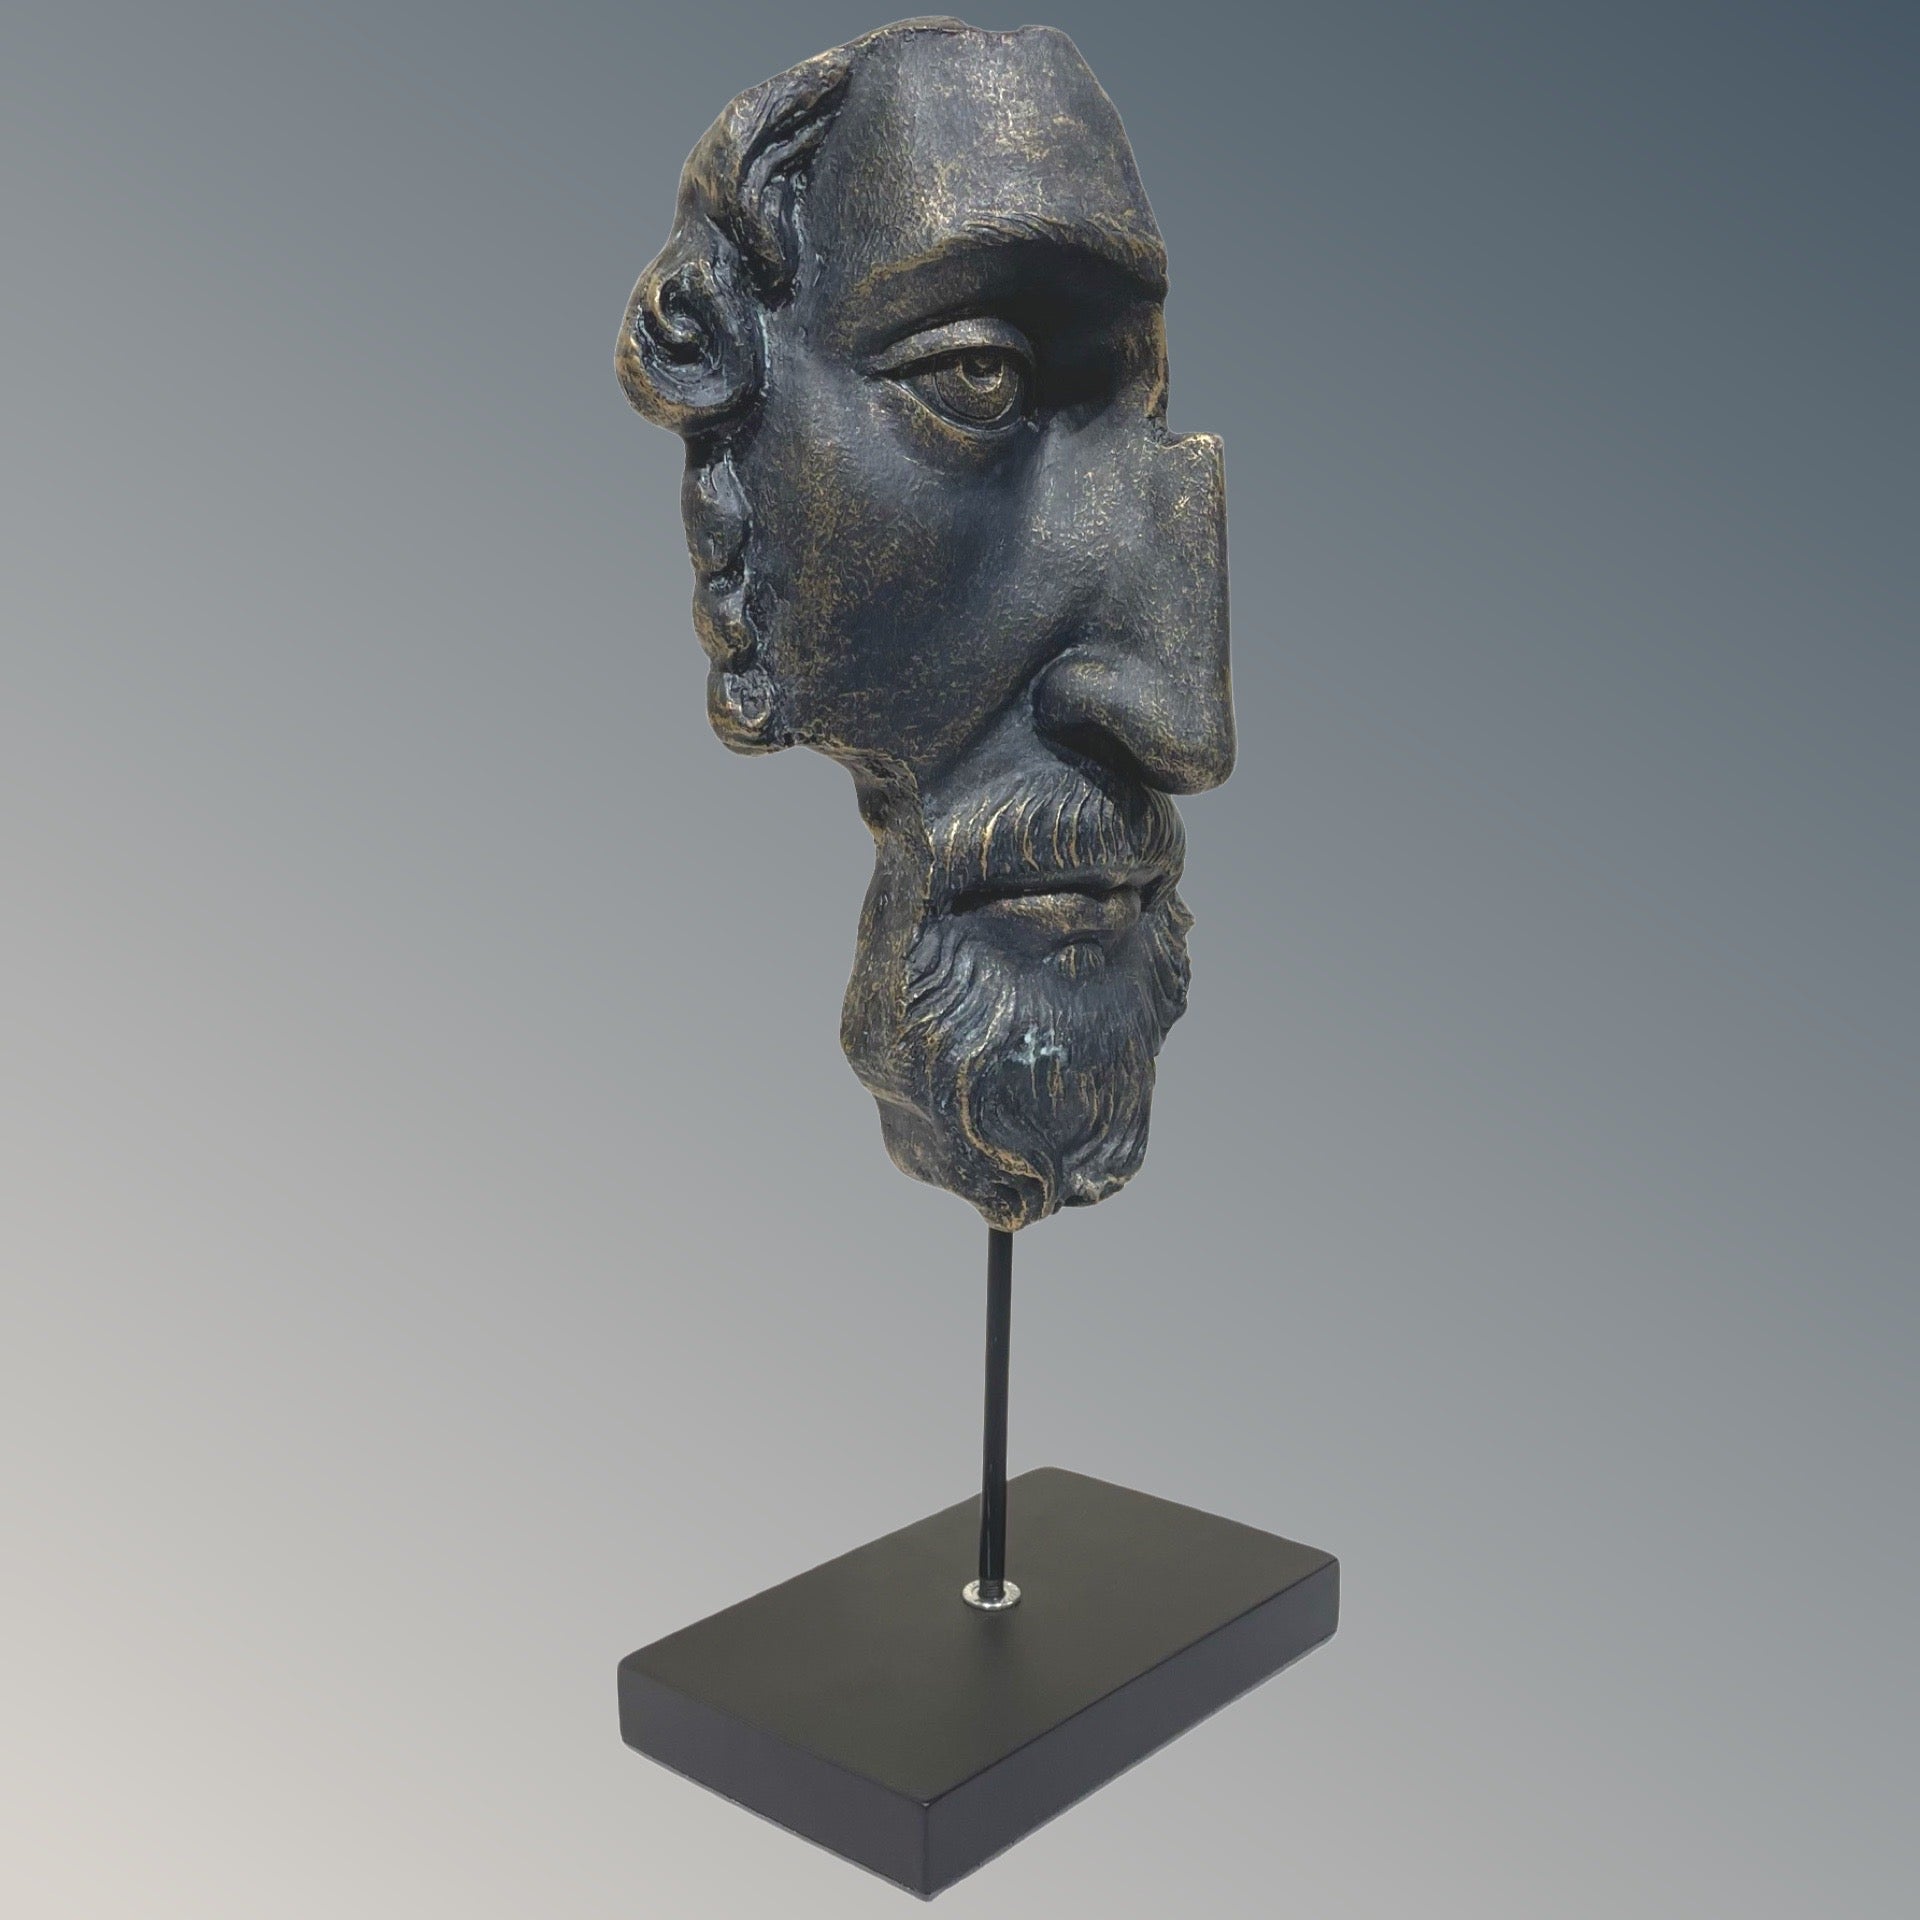 Figurine - The Grey Greek Face